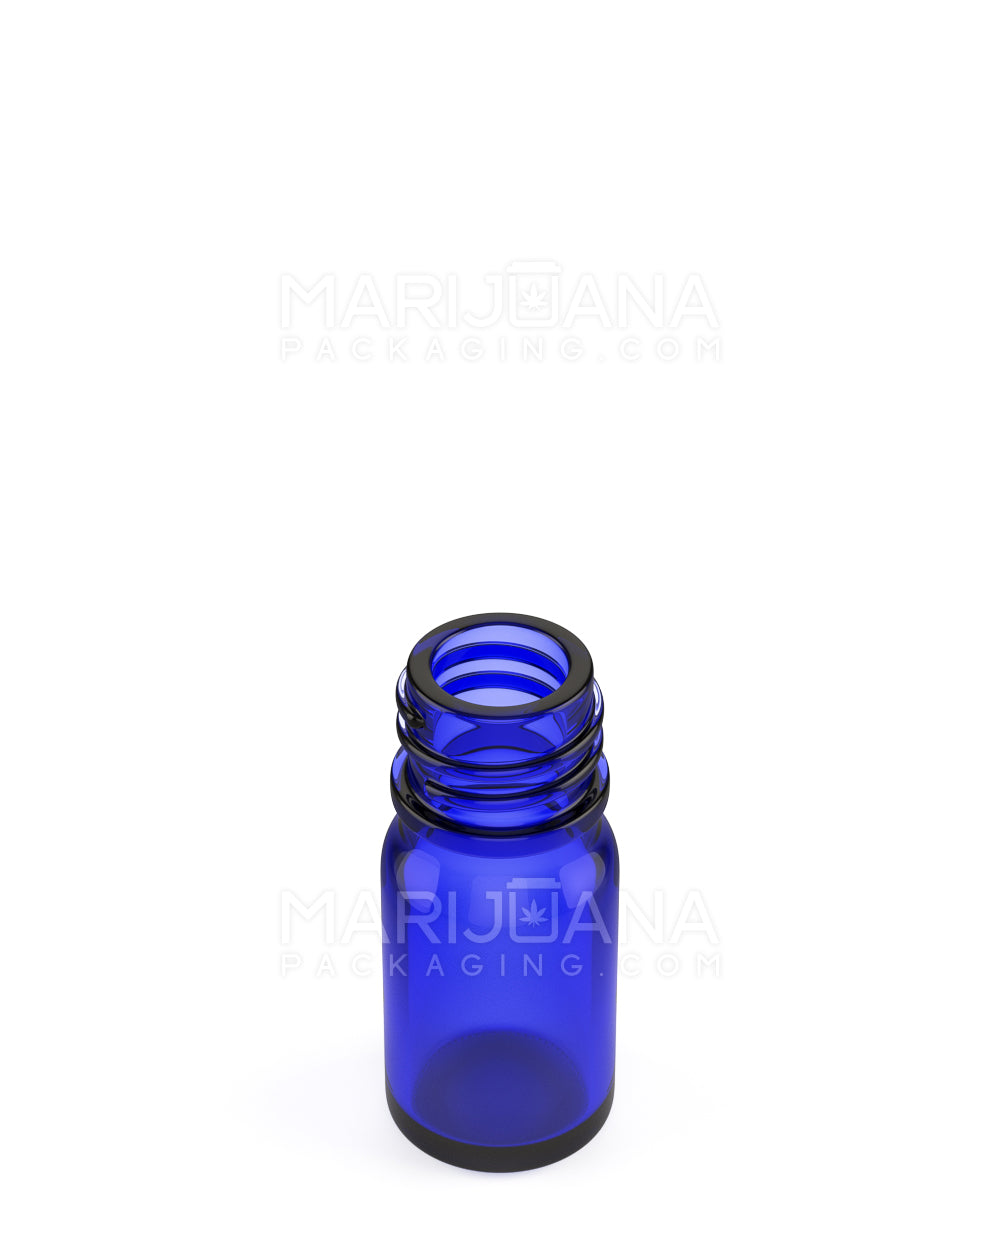 Child Resistant | Glass Tincture Bottles w/ Black Ribbed Dropper Cap | 5mL - Blue - 120 Count - 3